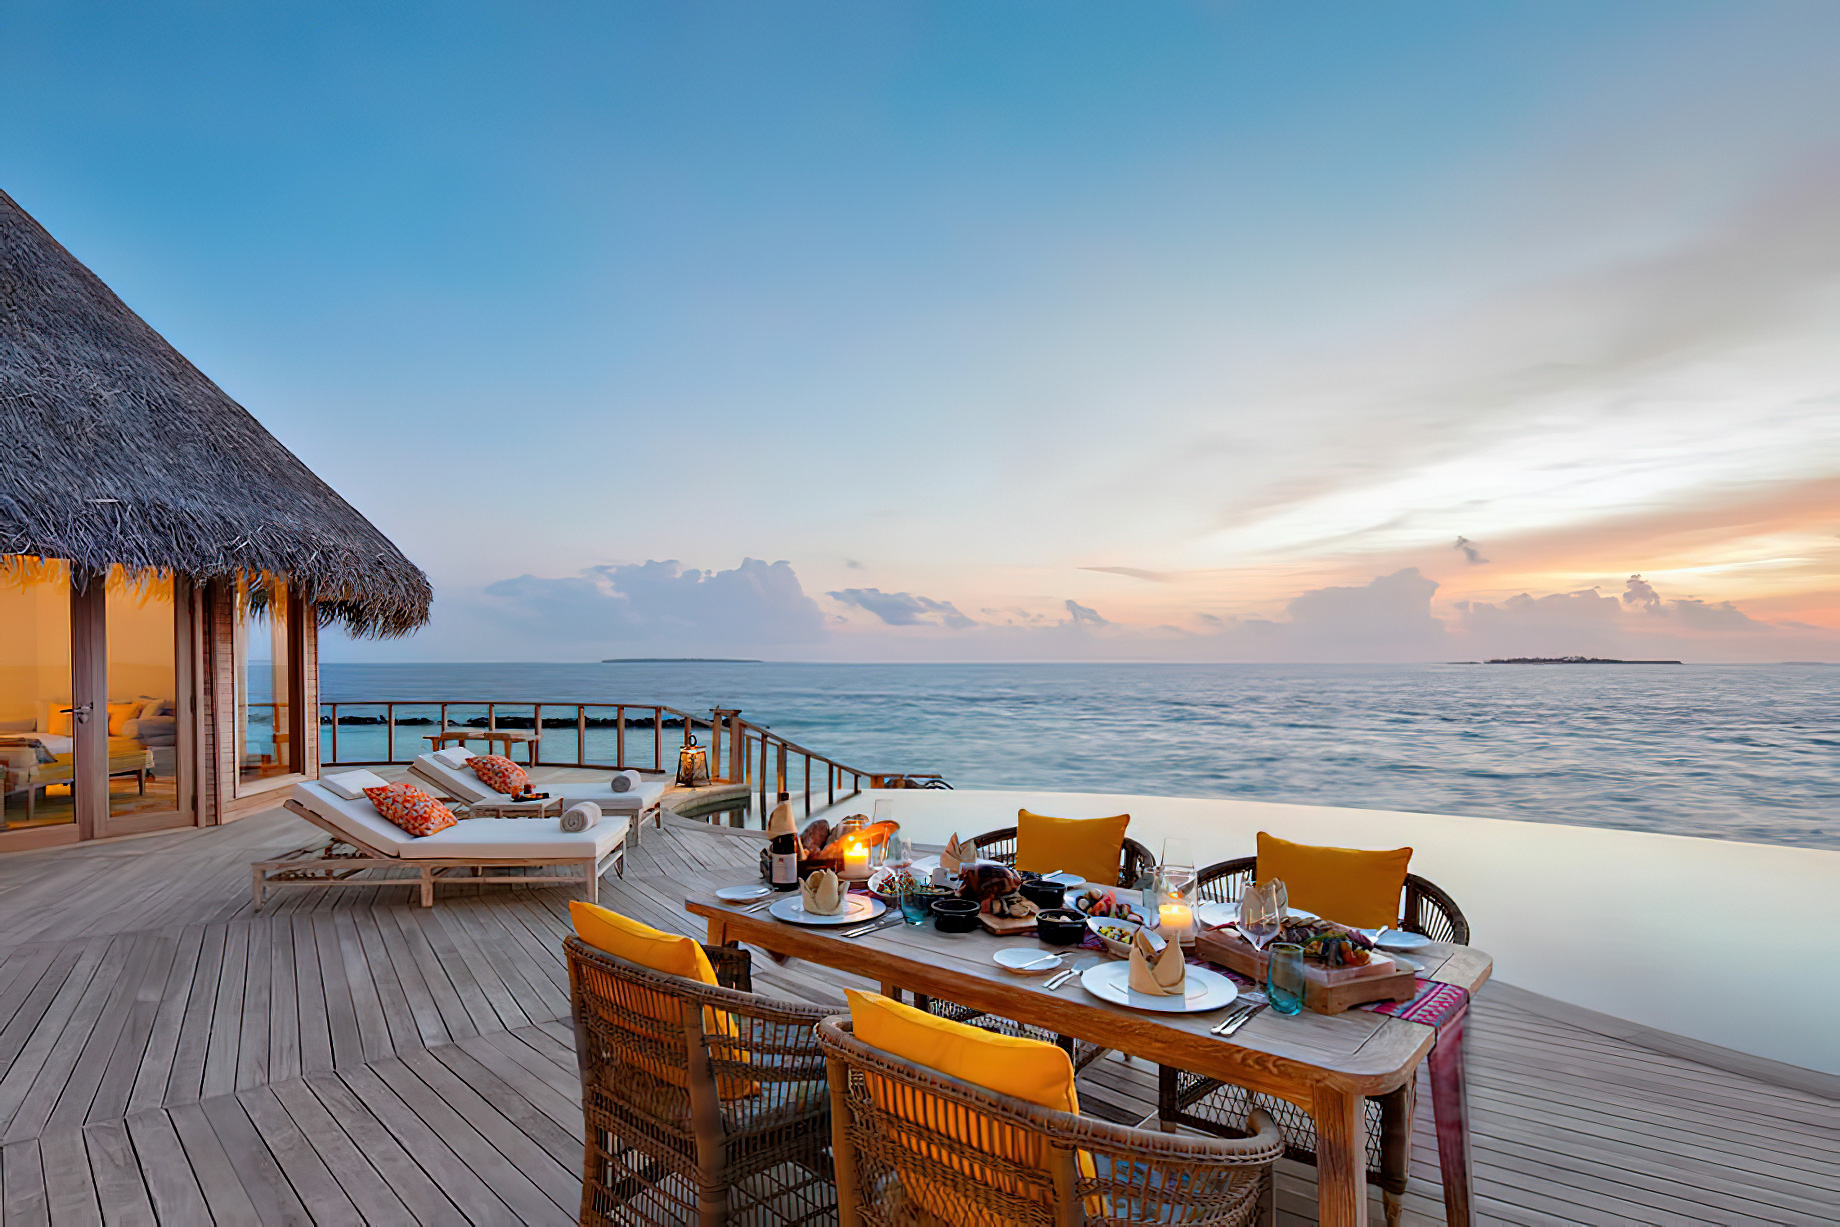 The Nautilus Maldives Resort - Thiladhoo Island, Maldives - Overwater Residence Pool Deck Sunset